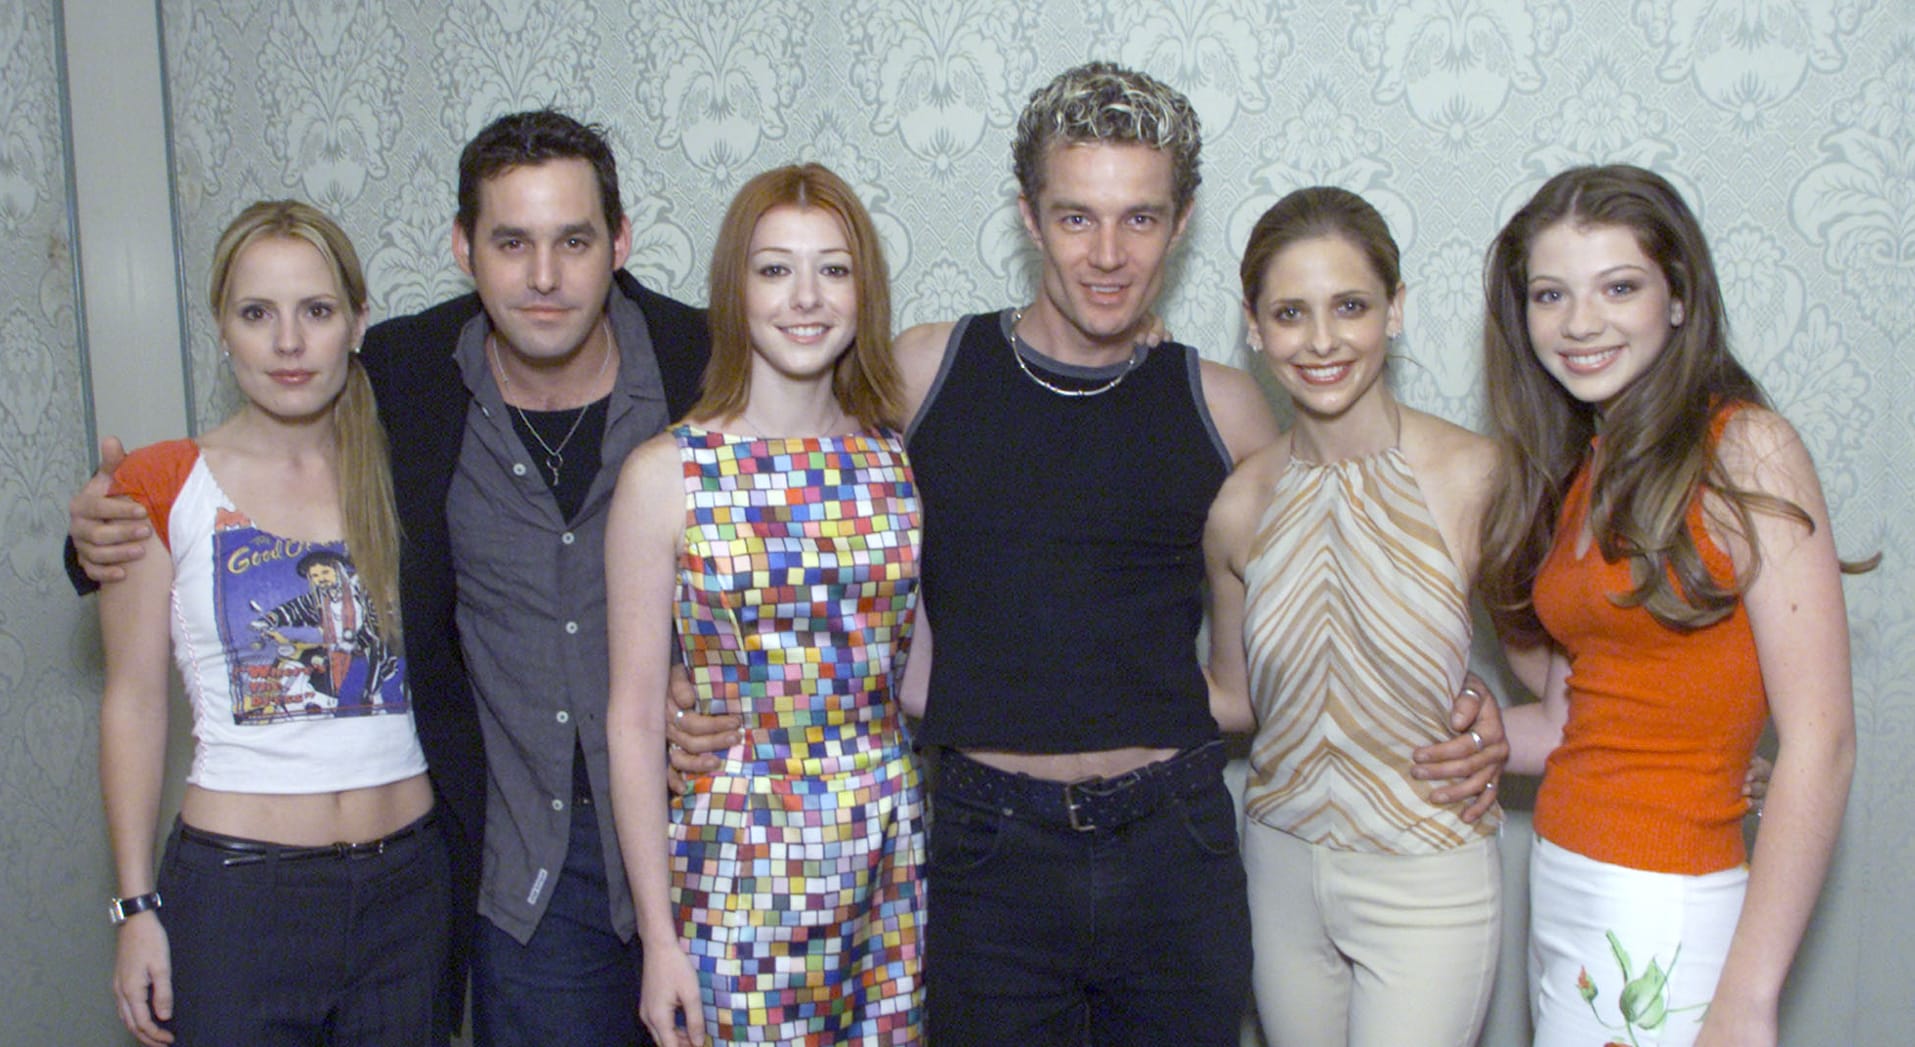 James Marsters teases Buffy favourite Oz's return for Slayers season 2